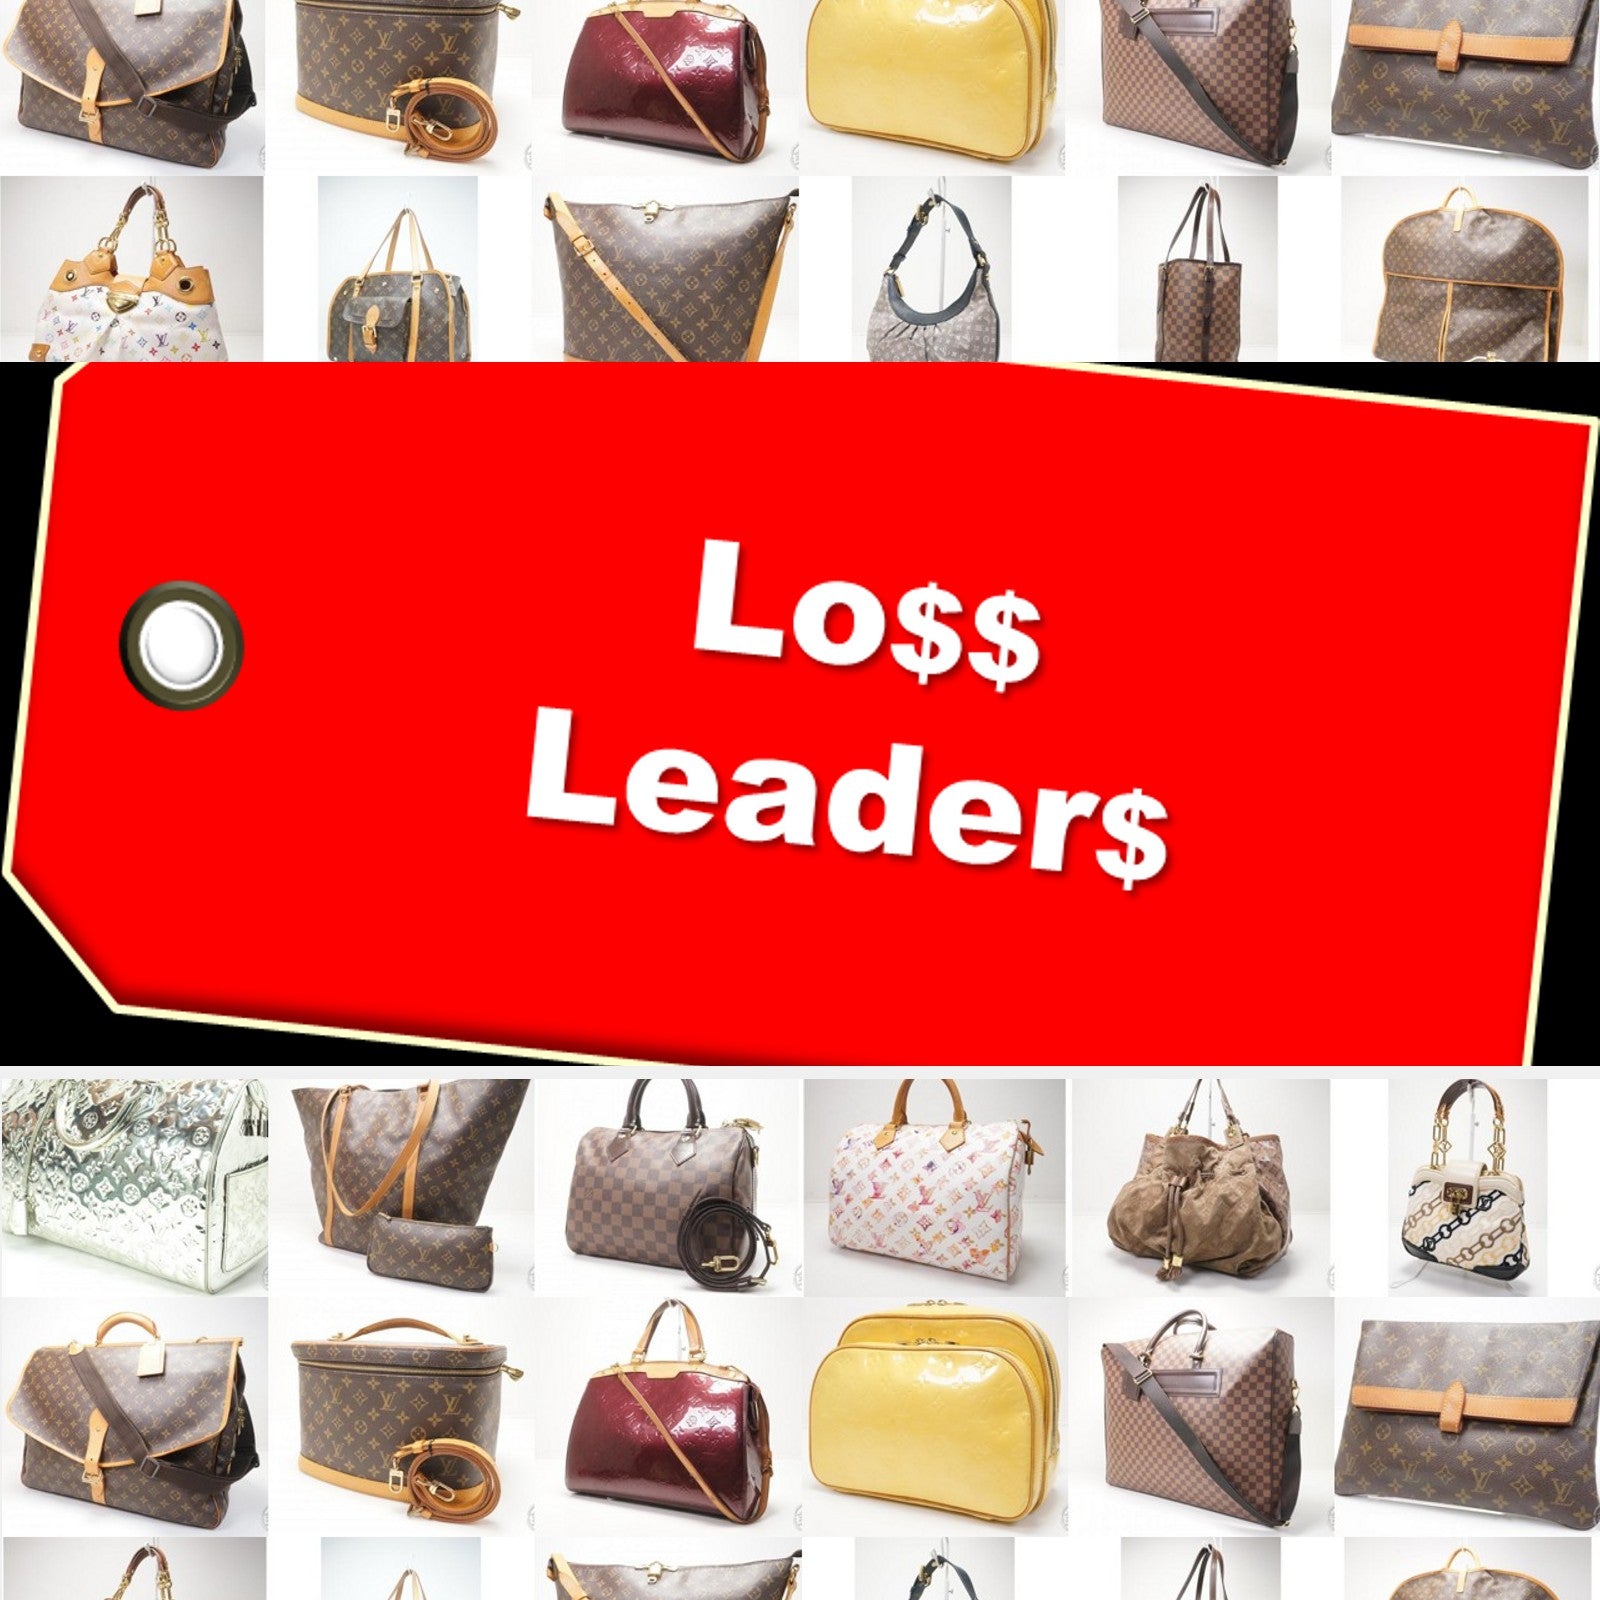 loss leader